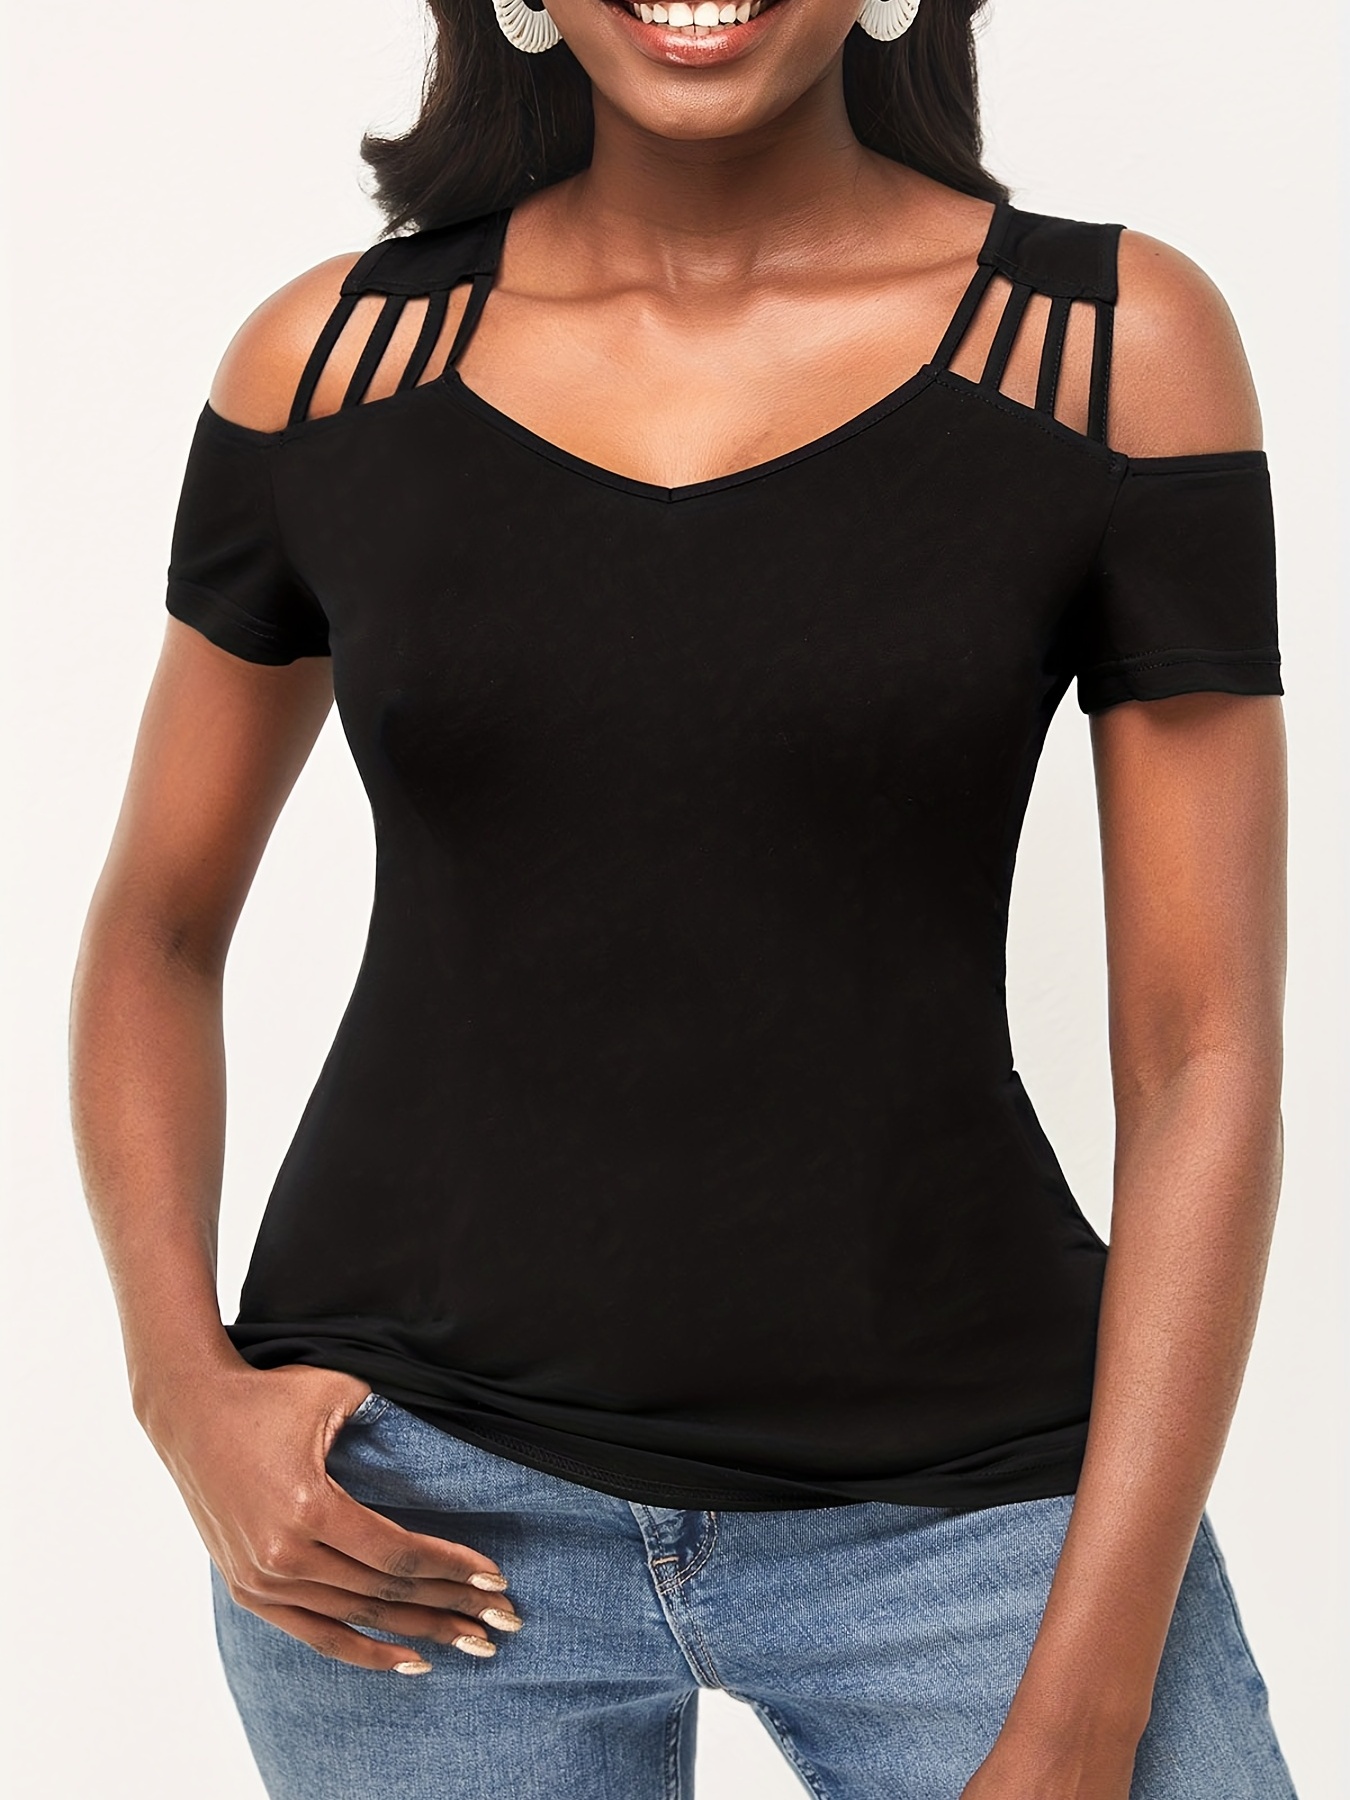 JWZUY Womens Summer V Neck Cold Shoulder Tops T Shirts Cut out Lace Short  Sleeve Solid Color Blouses Shirt Solid Elegant Tees Tops Black M 